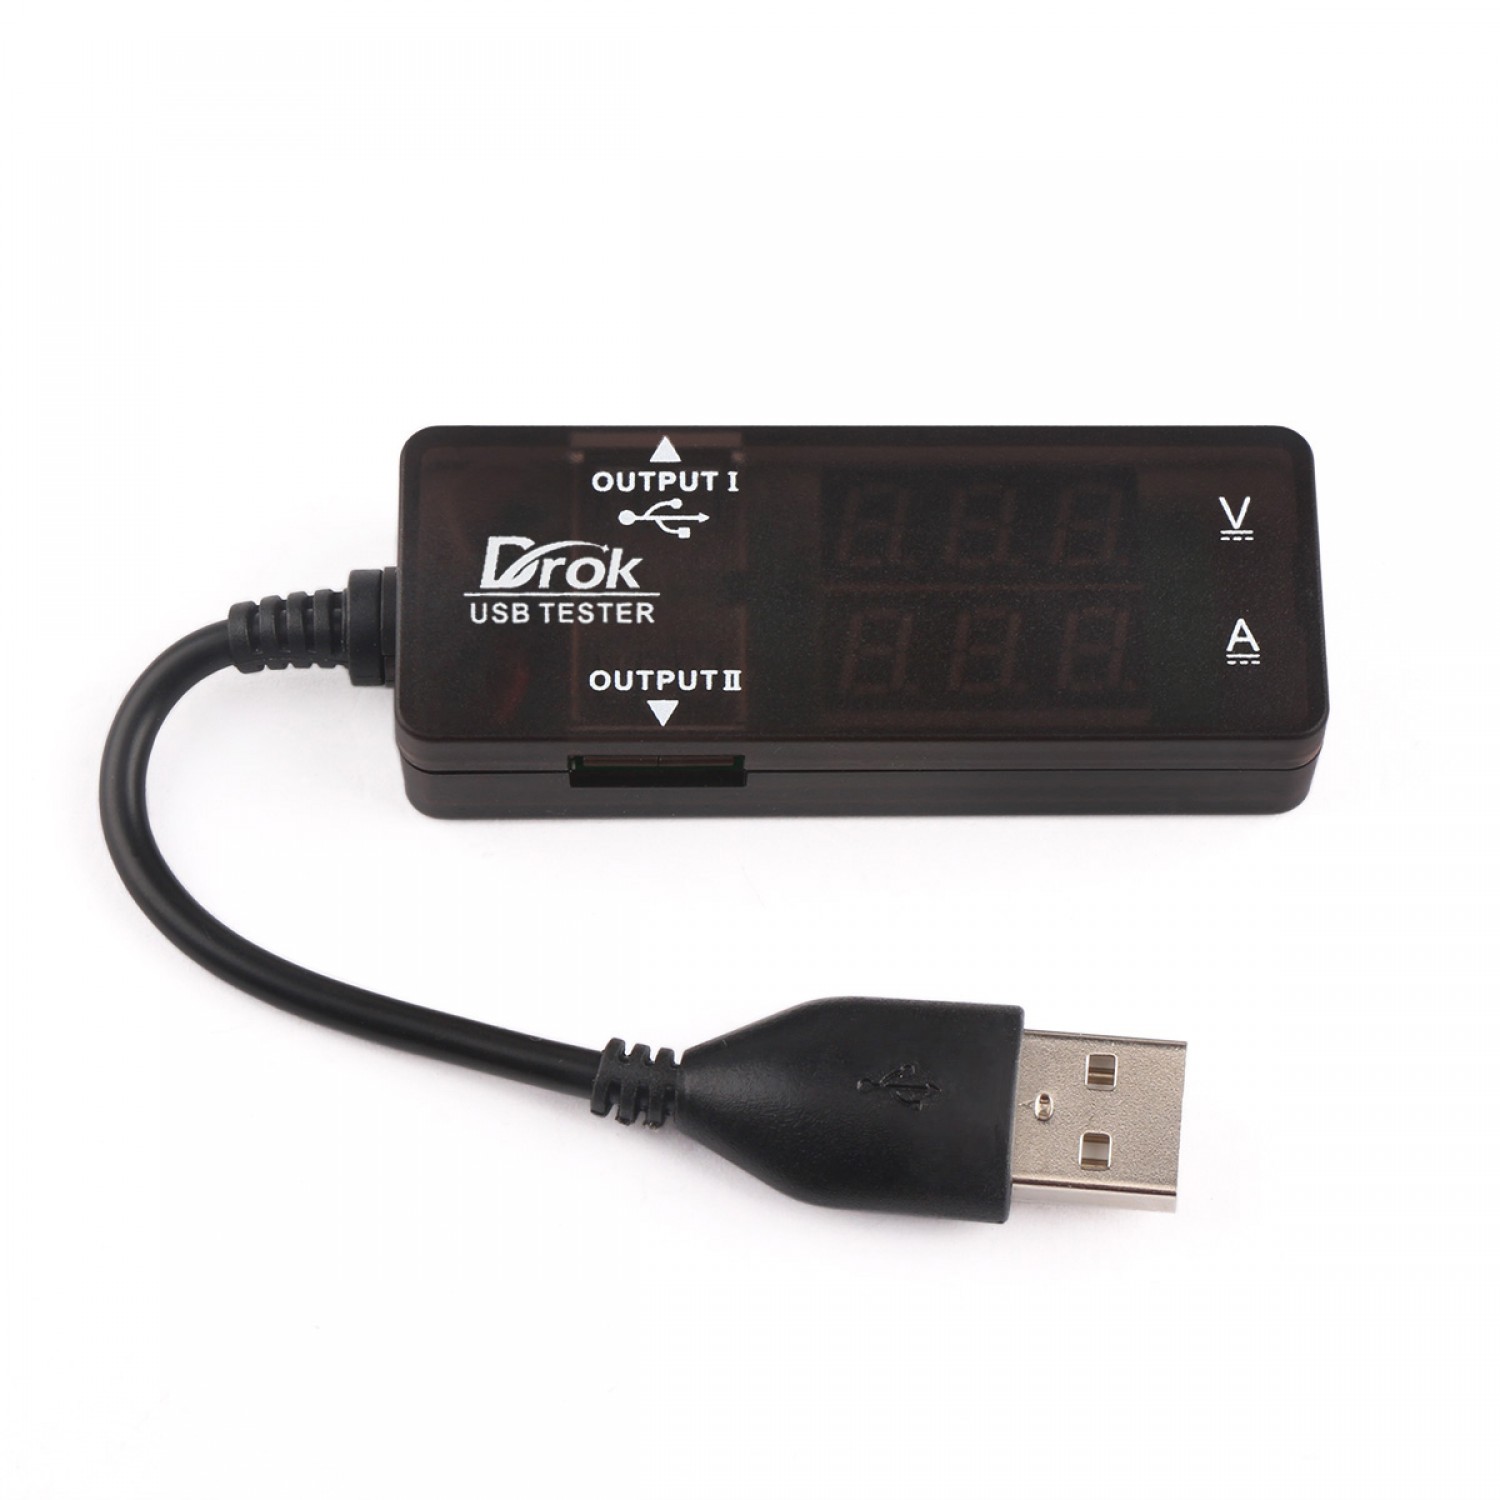 Capacity Voltage USB Meter 7 Modes Current Power Meter Detector Reader with Dual USB Ports Multifunctional Electrical Tester DROK Digital Multimeter USB 2.0 LED Display 